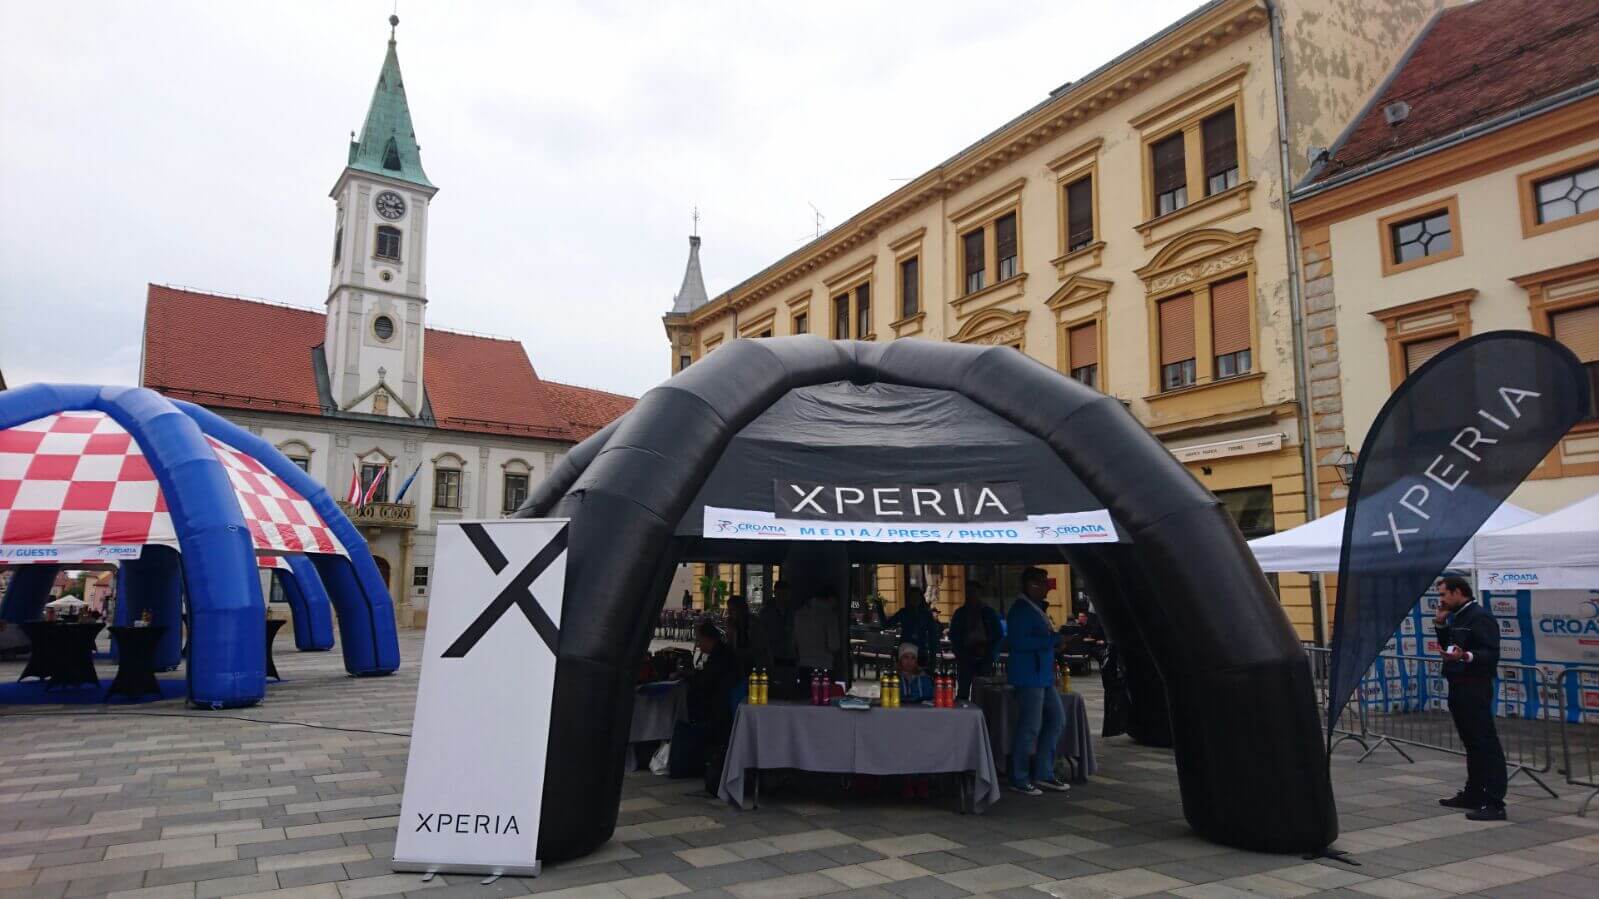 Sony Xperia Tour of Croatia hotspot